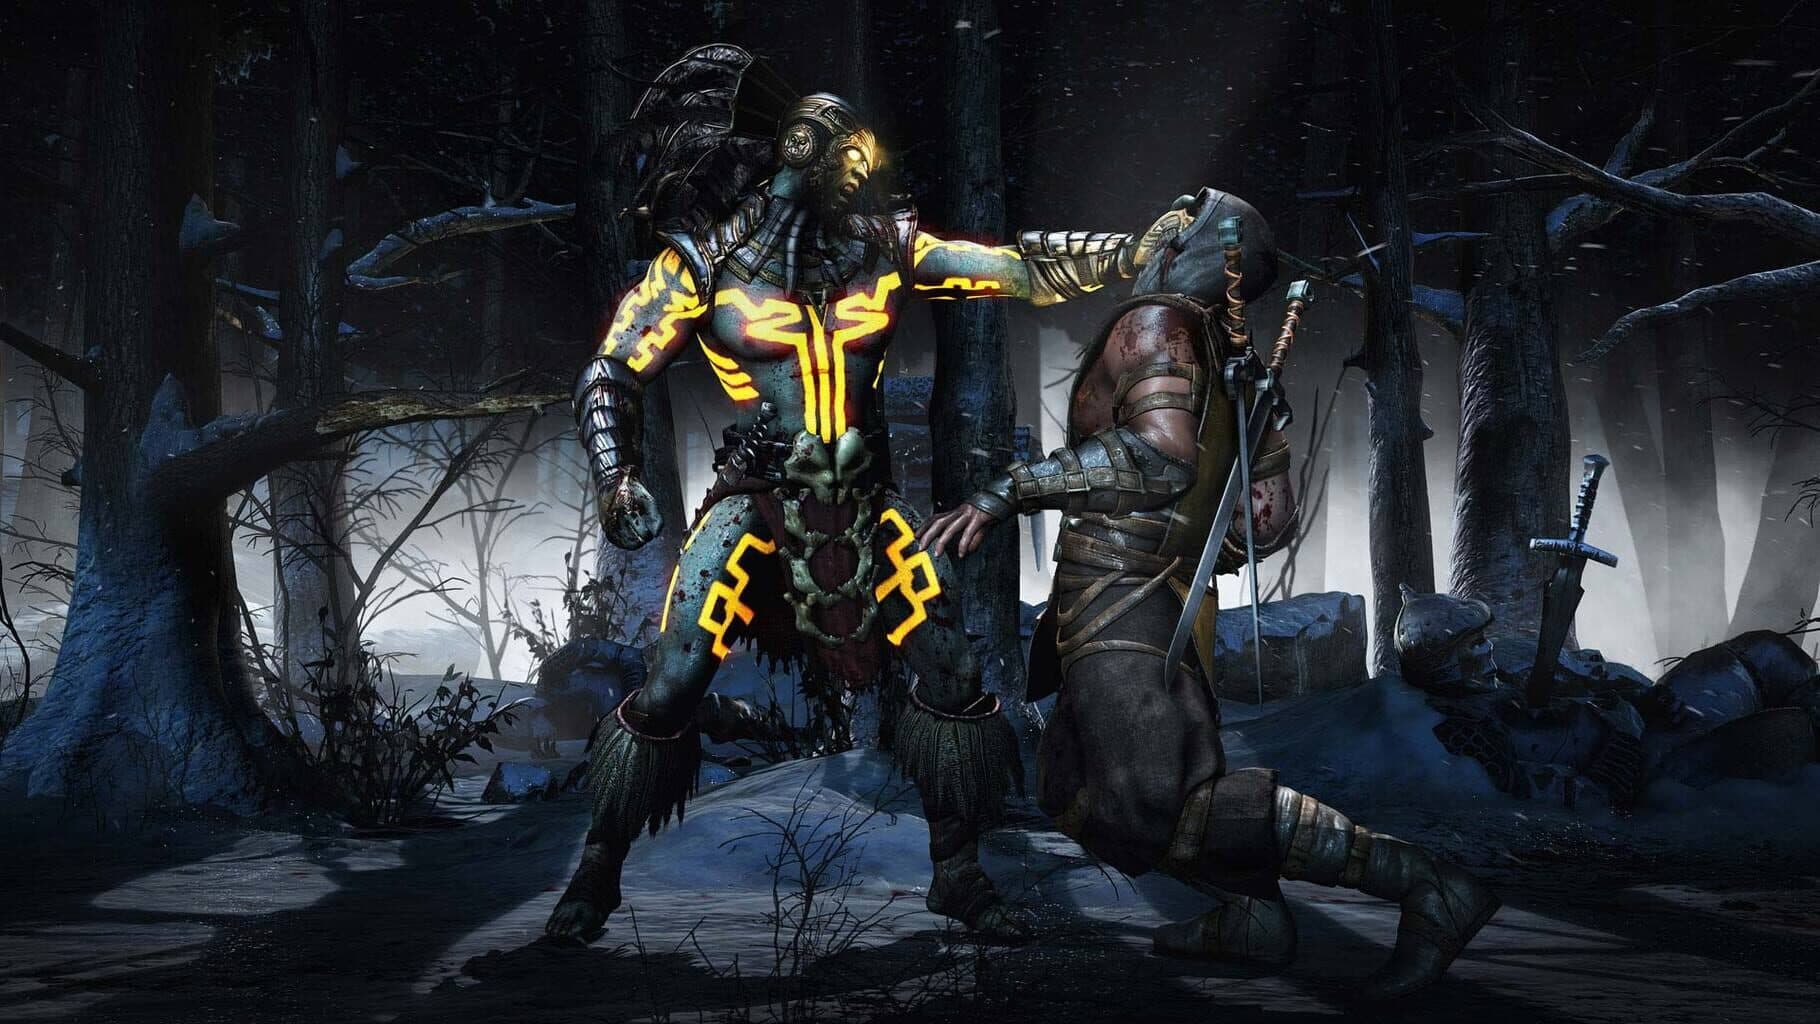 Mortal Kombat XL Image